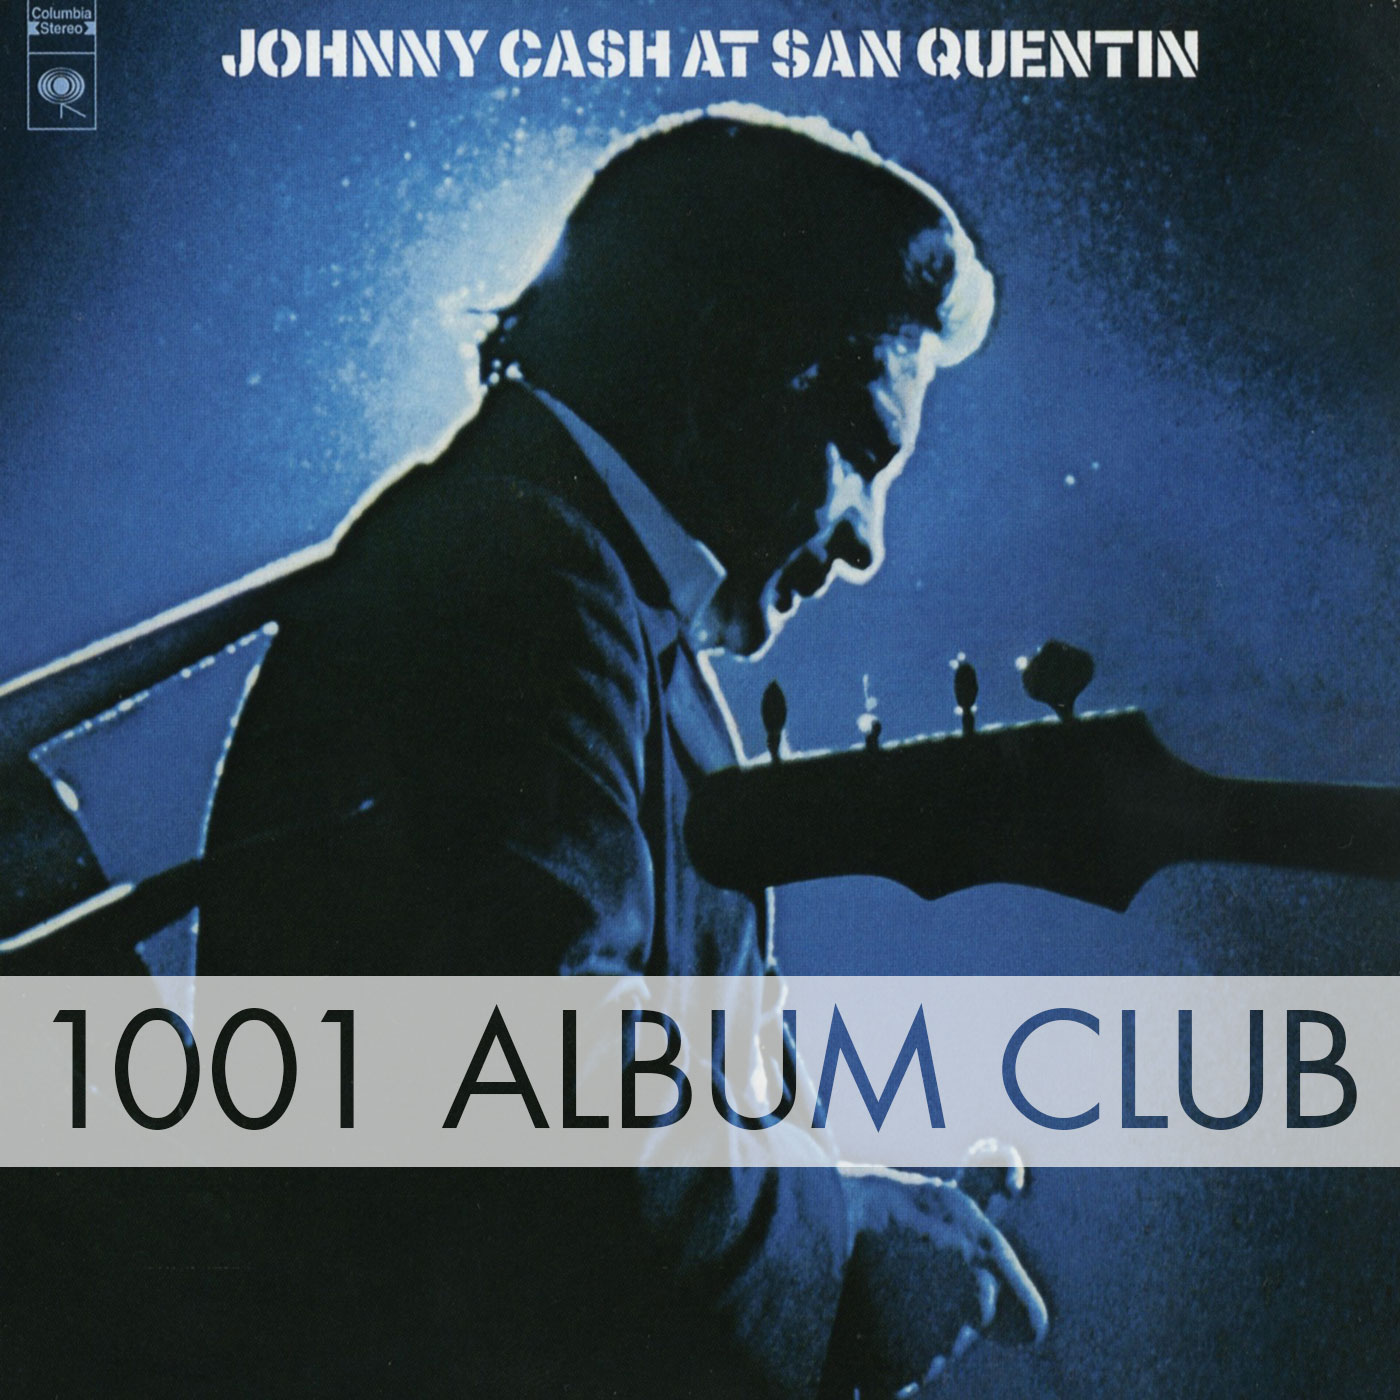 142 Johnny Cash – At San Quentin – 1001 Album Club